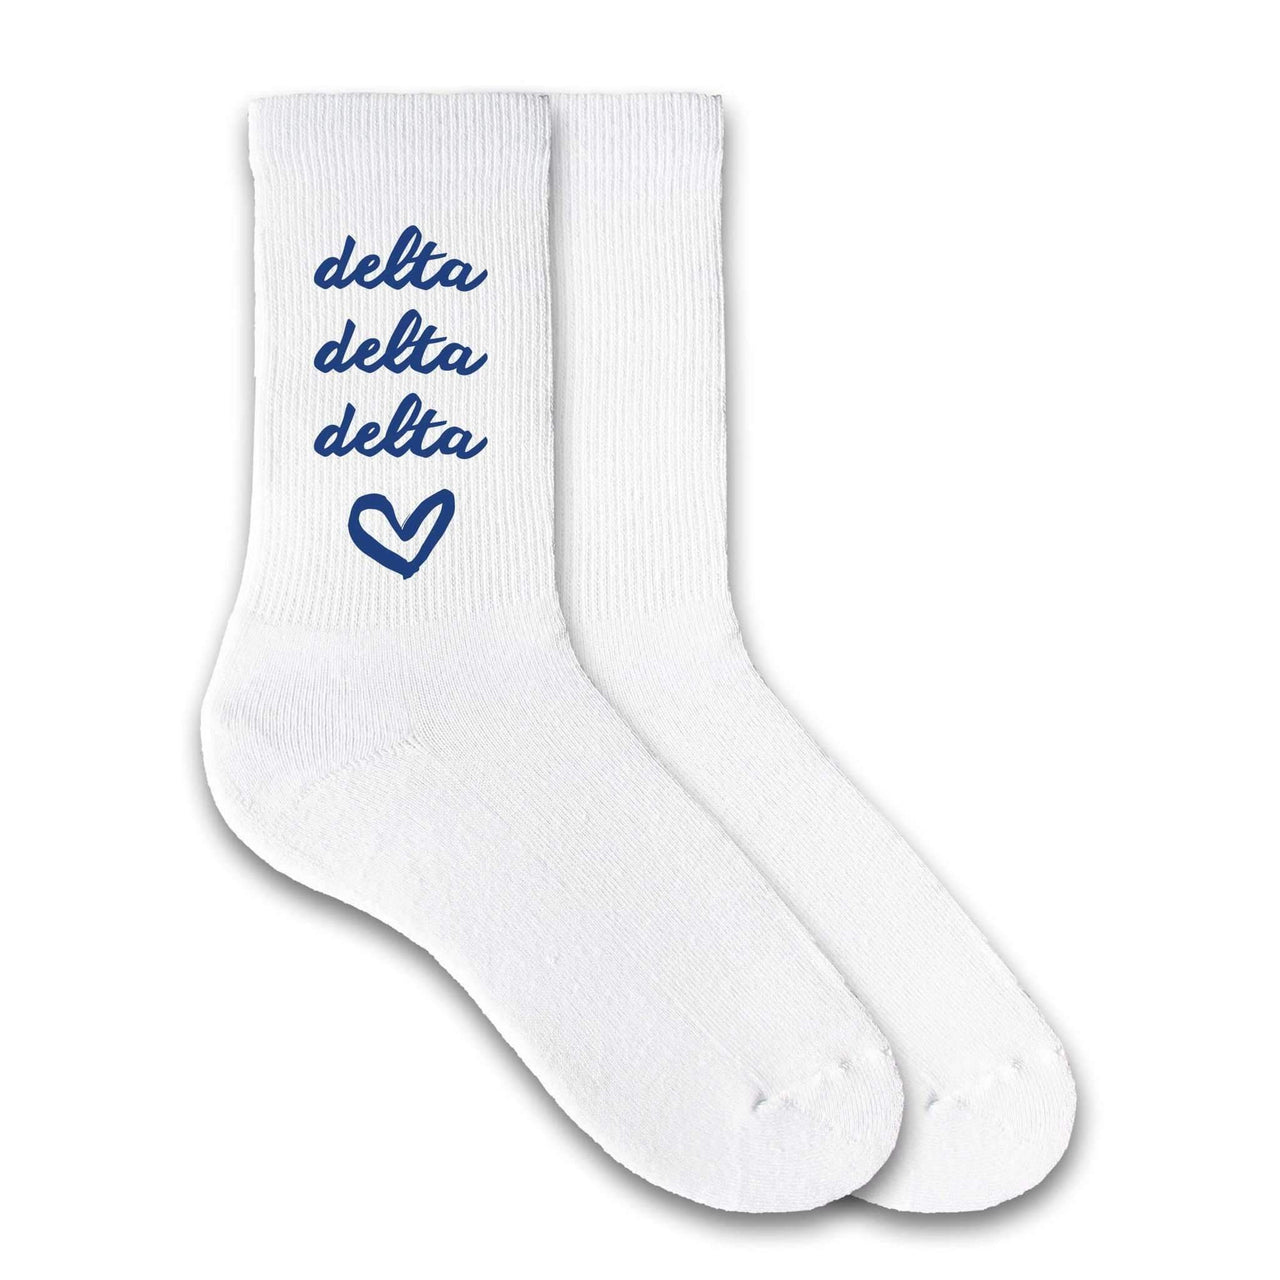 Delta Delta Delta sorority name heart design custom printed on white cotton crew socks